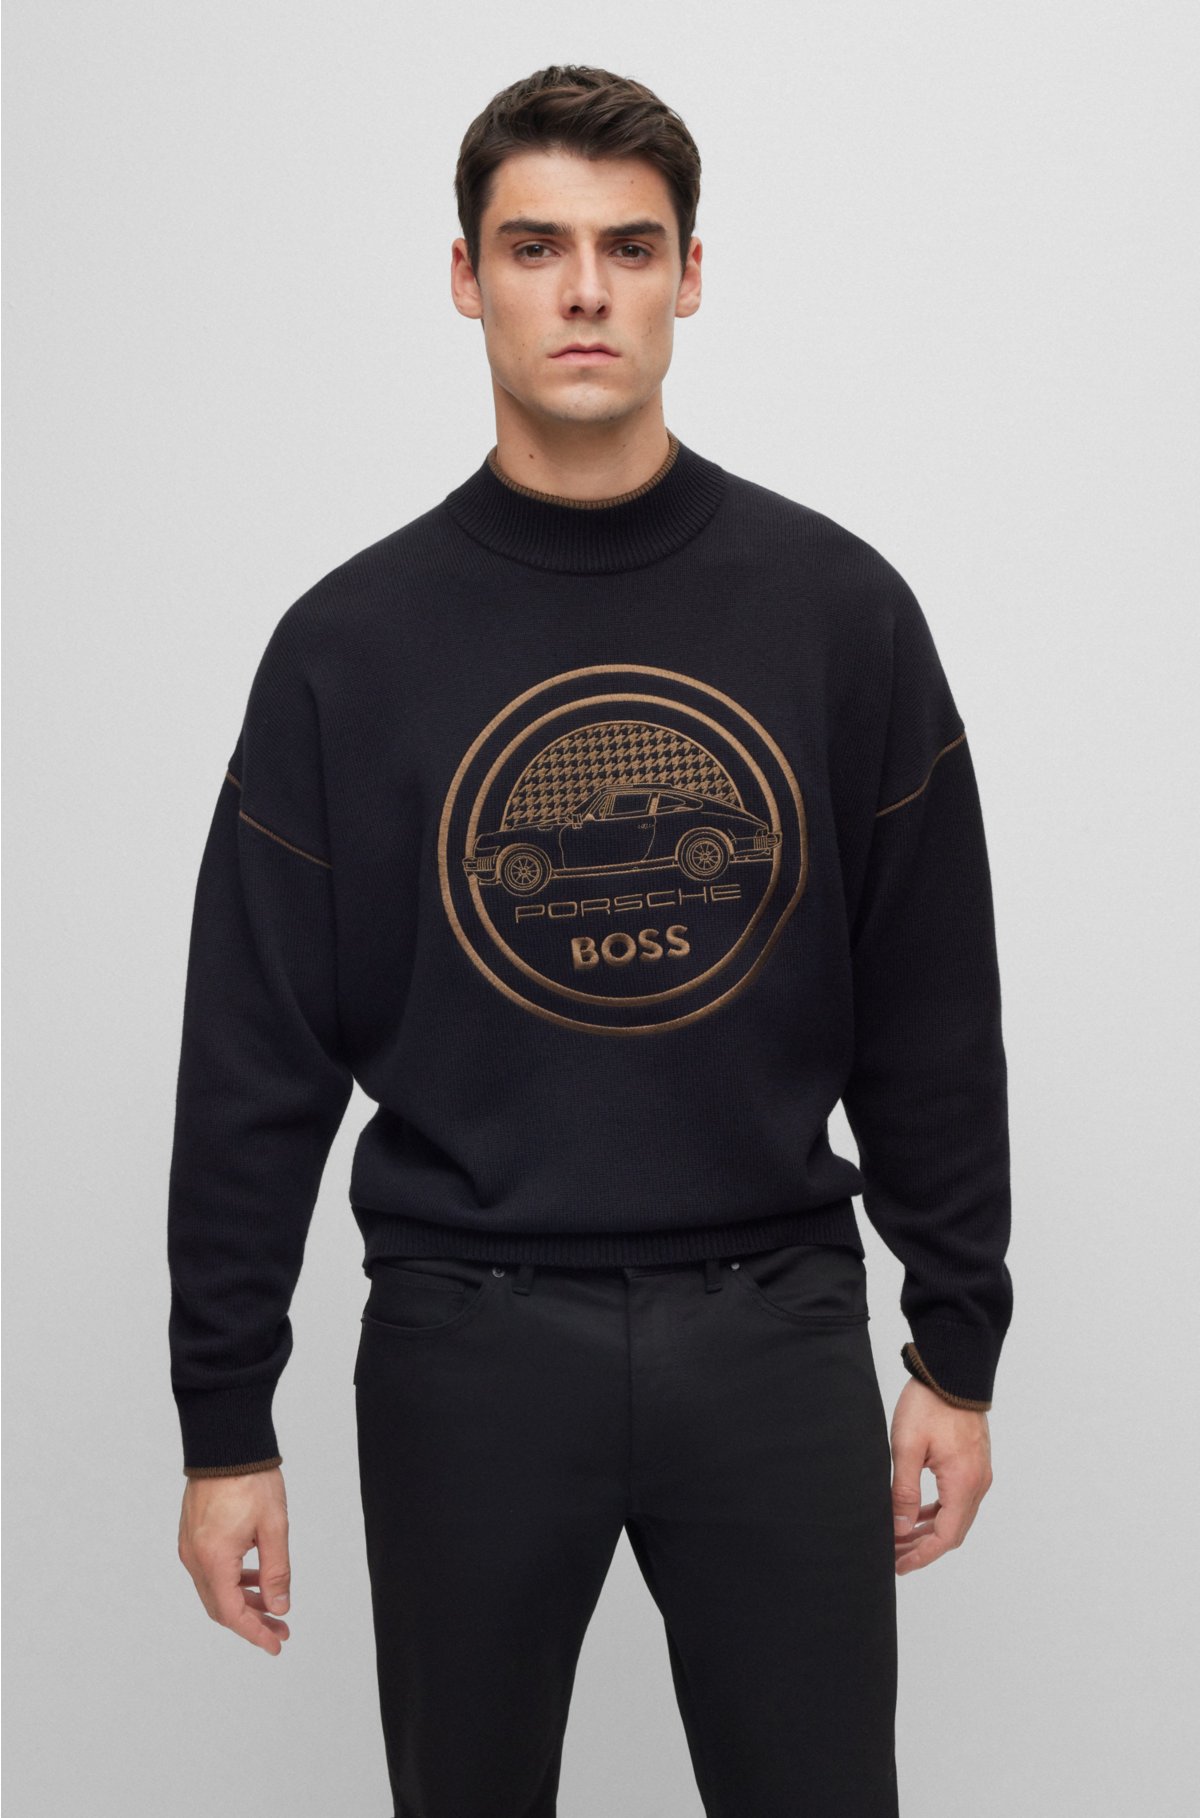 BOSS Hommes Siras-PS Casquette Porsche x avec Logo imprimé Exclusif :  : Mode